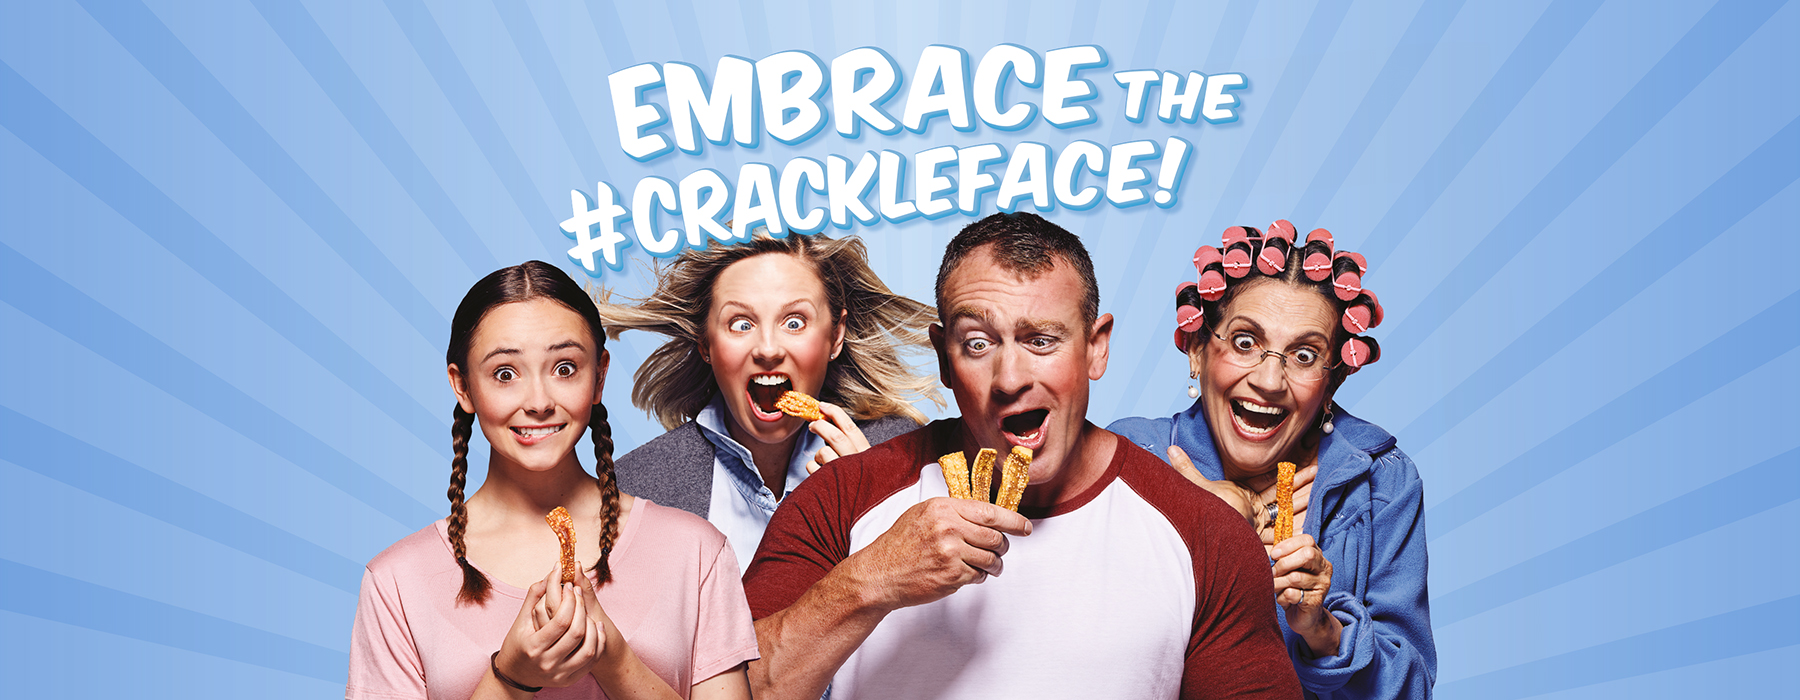 Crackle Face